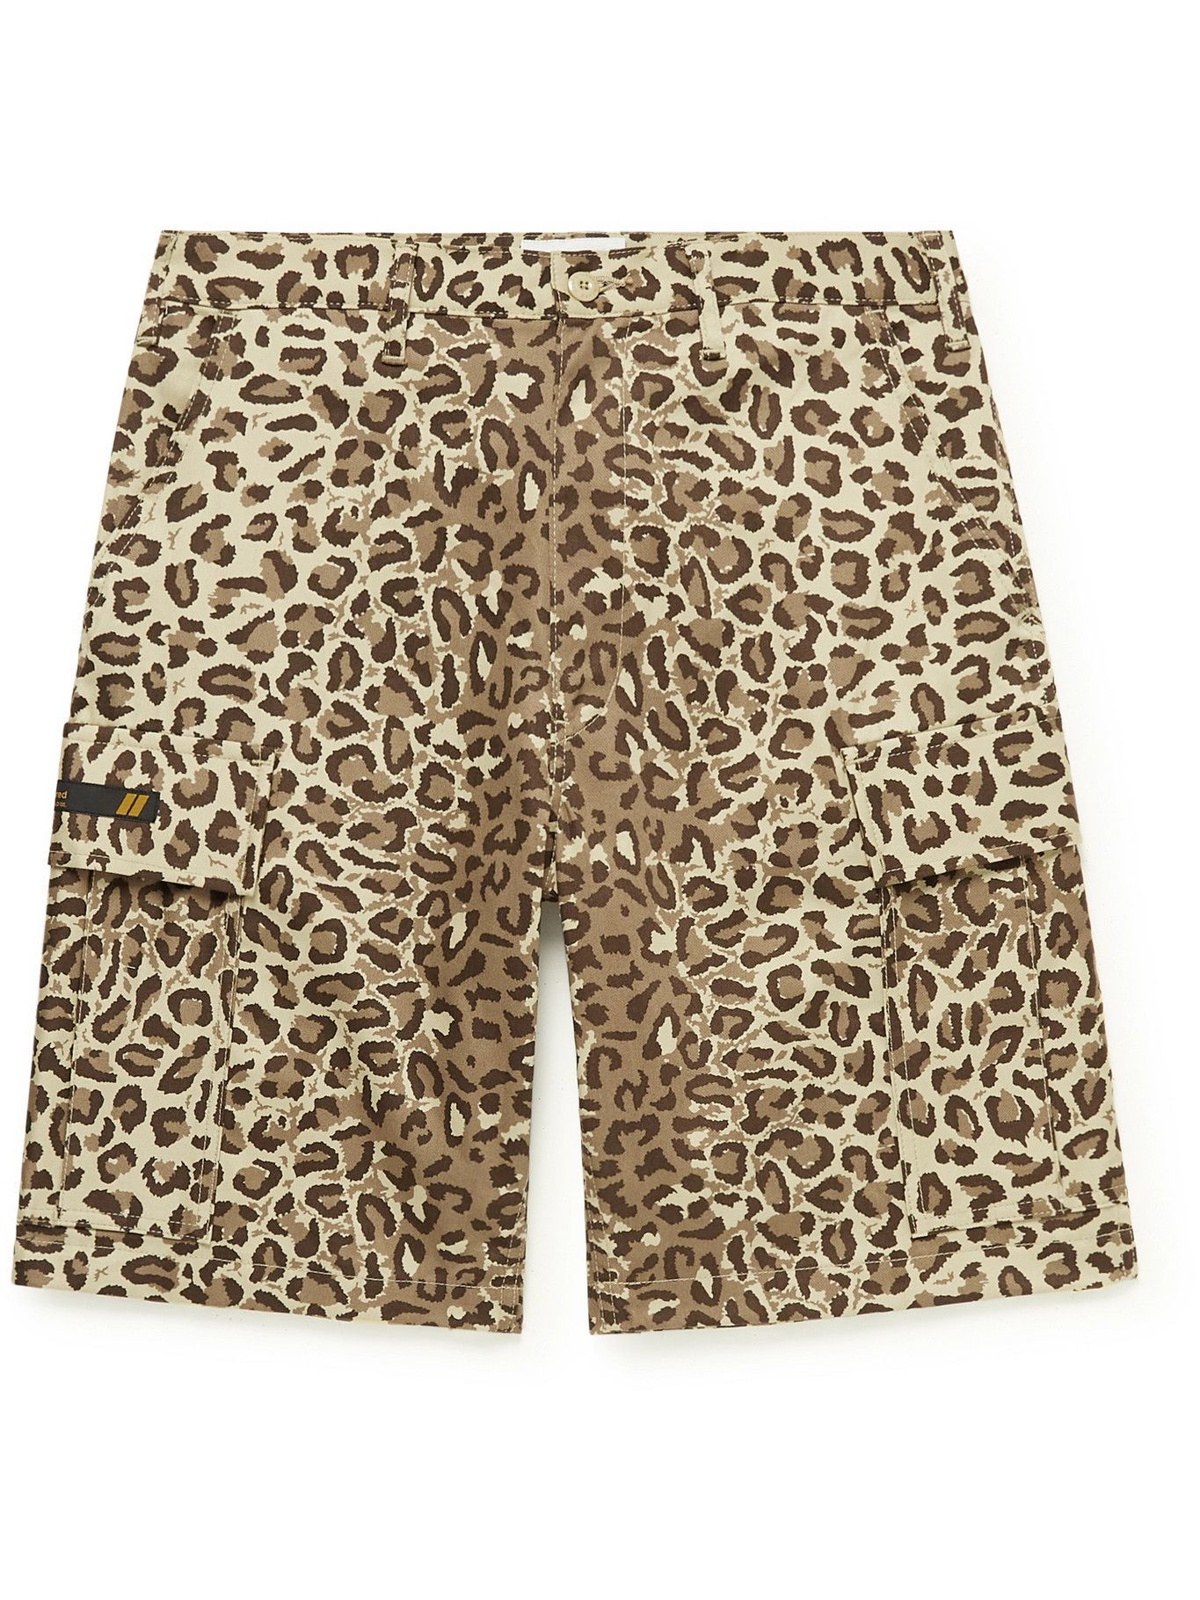 WTAPS - Jungle 01 Leopard-Print Cotton-Twill Cargo Shorts - Animal 